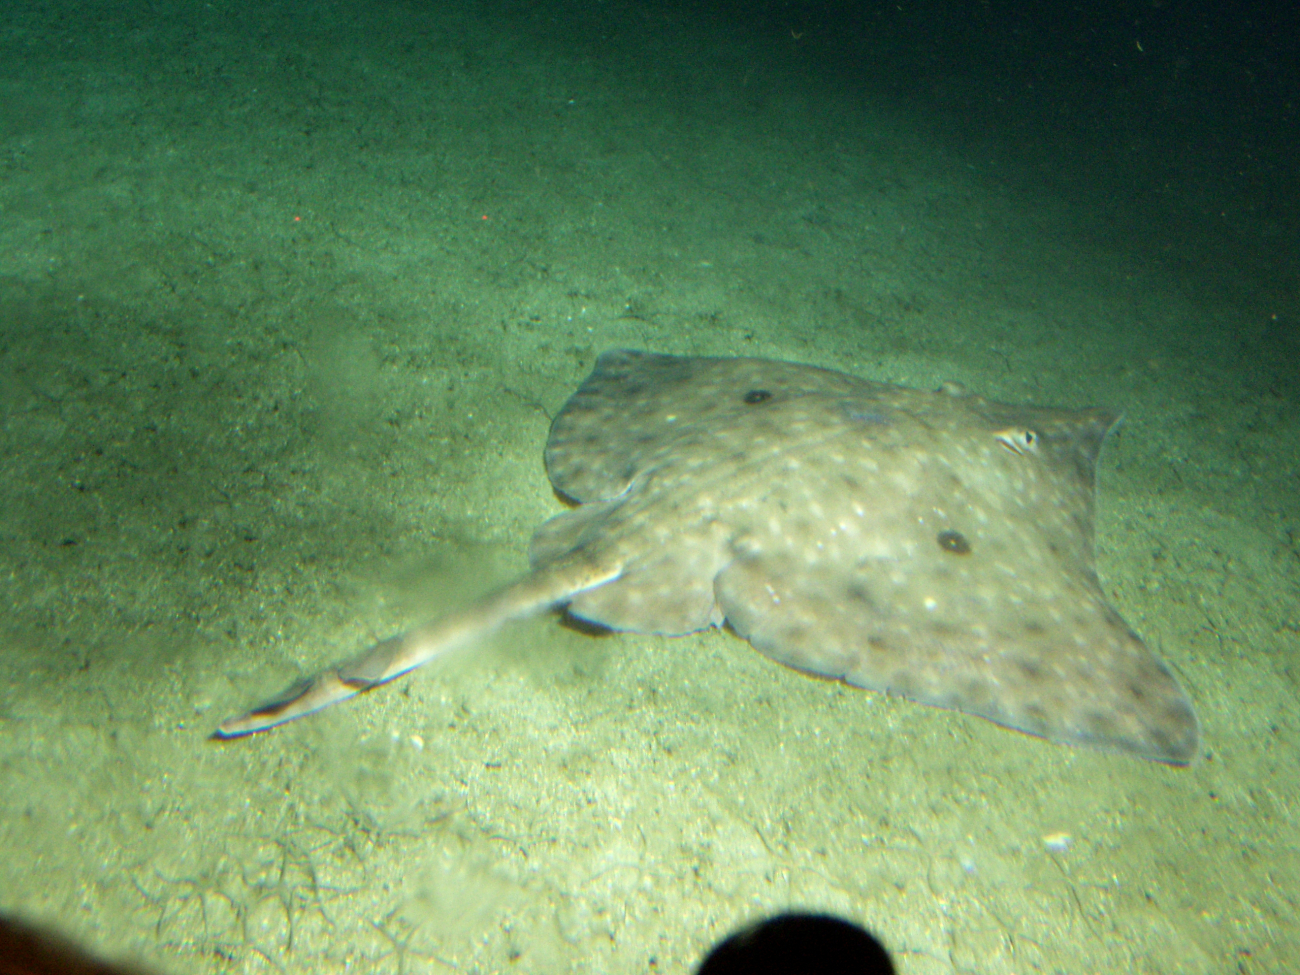 Long nose skate in soft bottom habitatat 116 meters depth